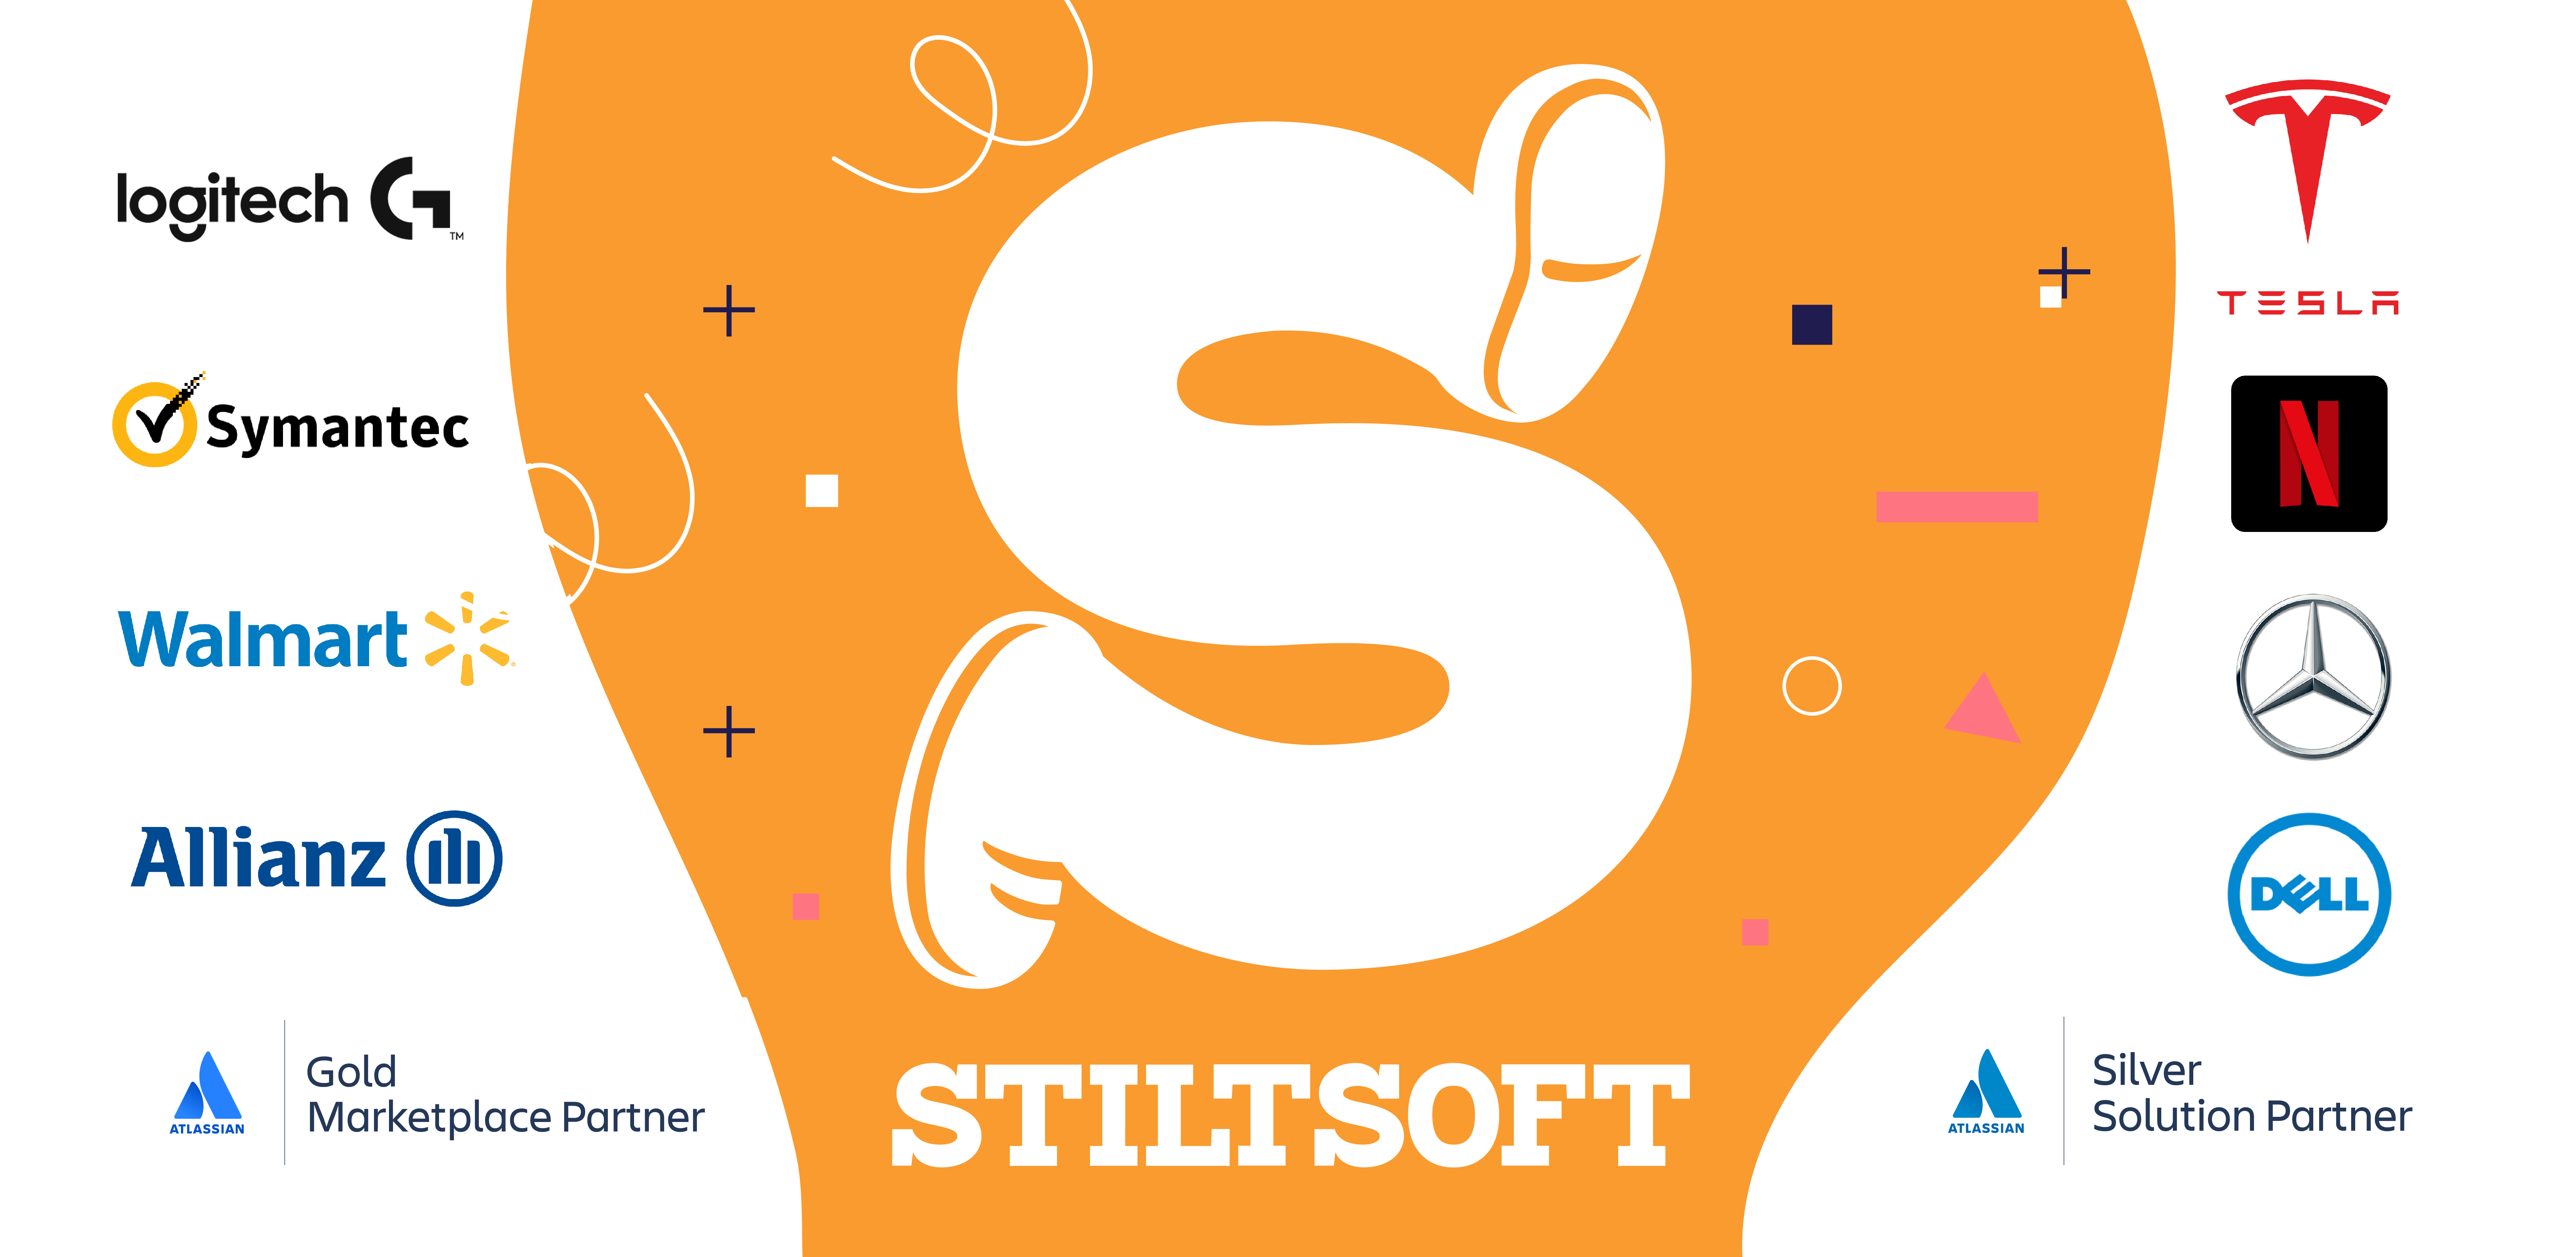 Stiltsoft customers